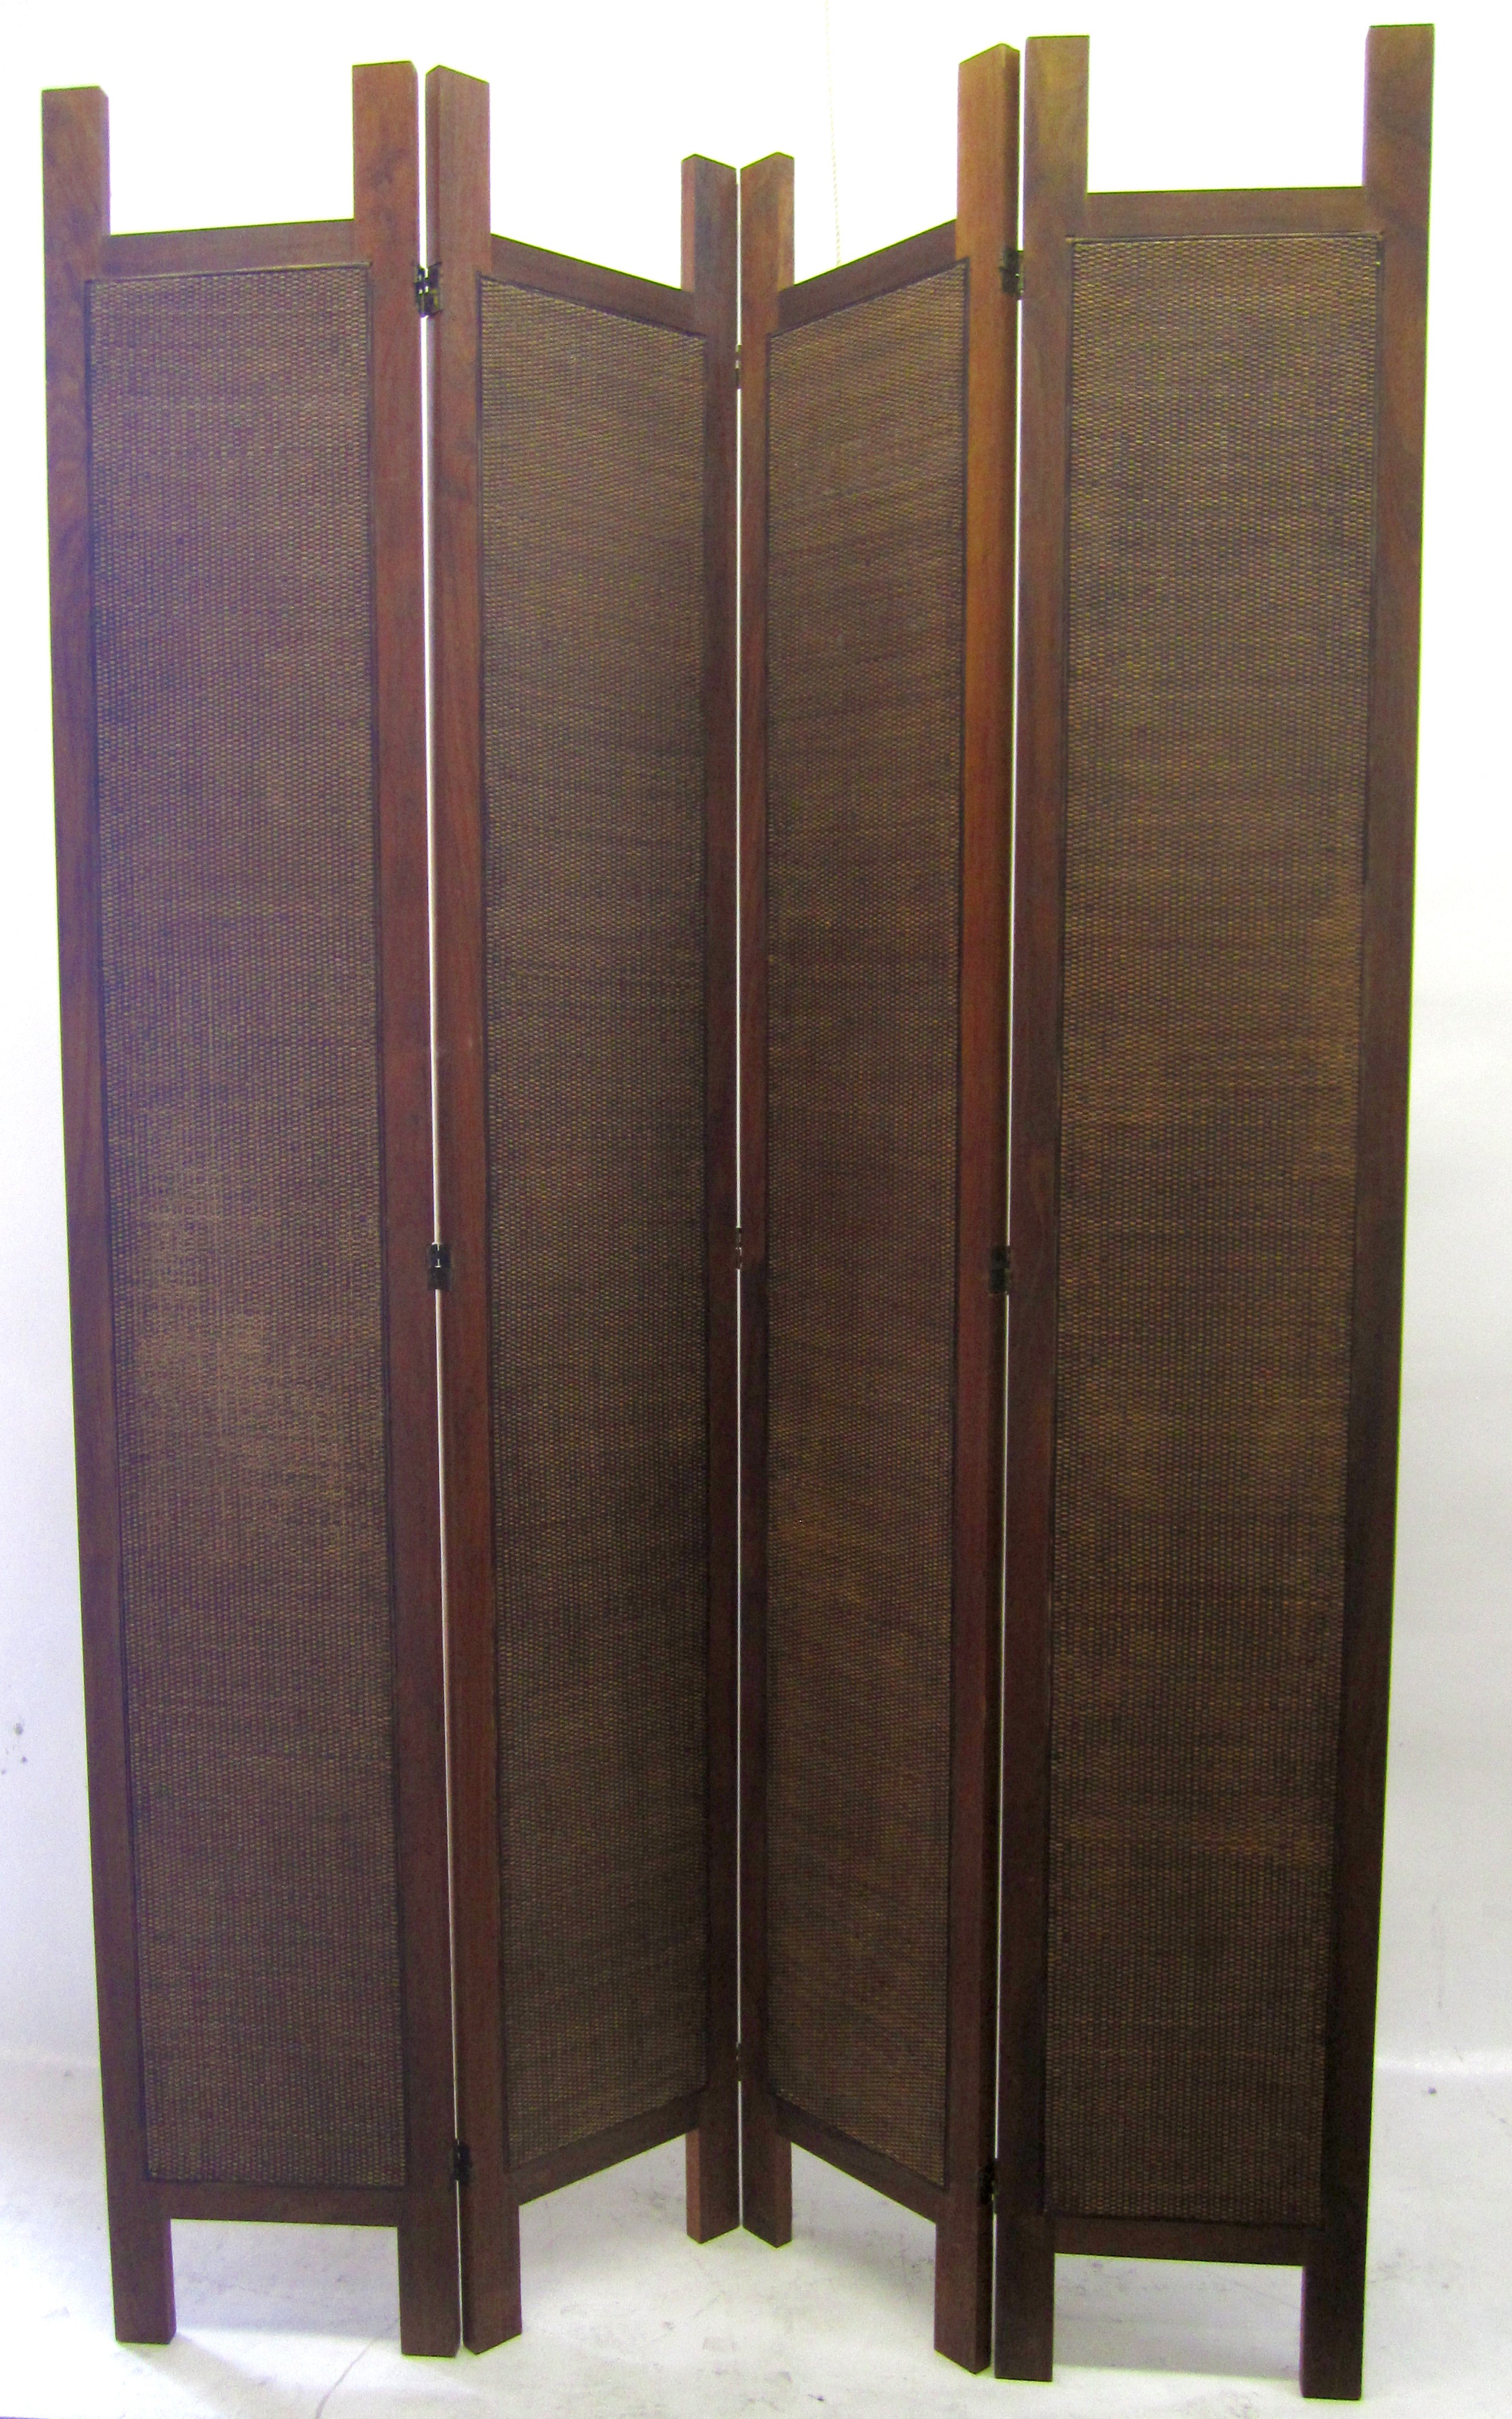 8 Foot Tall Four-Panel Woven Rattan Screen / Divider